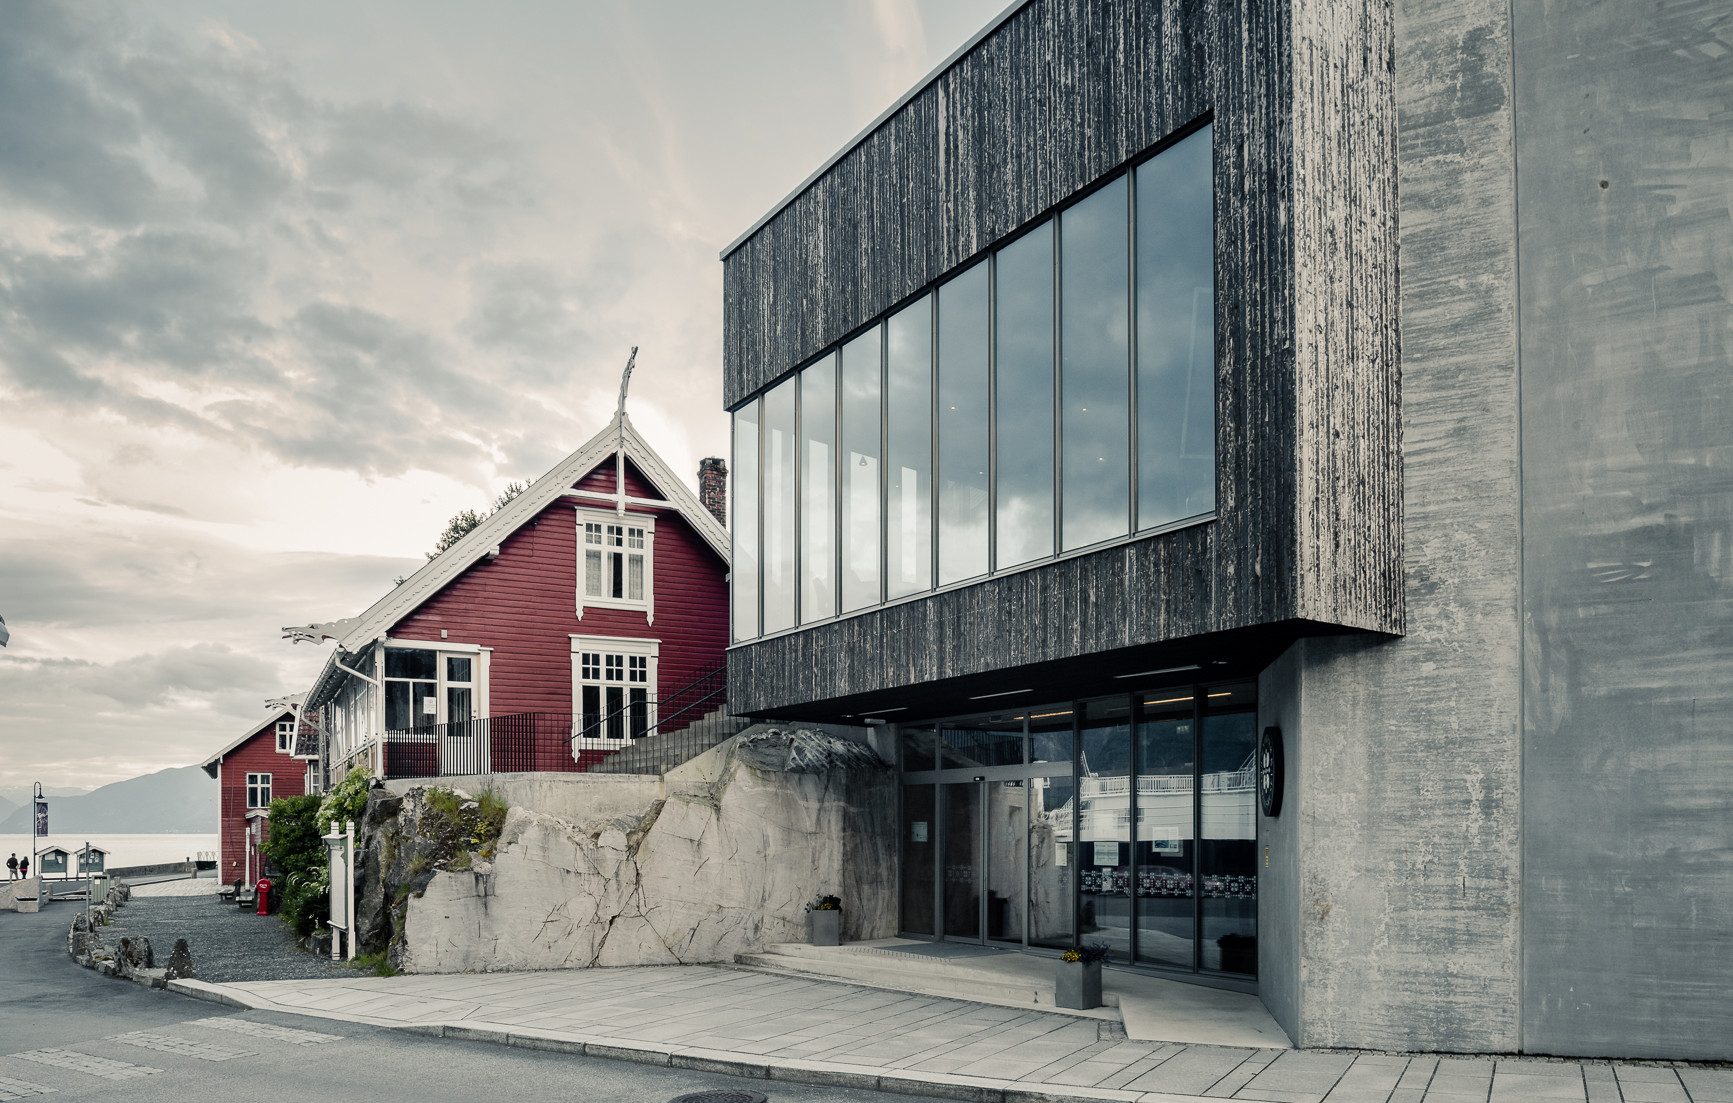 Fasaden på Norsk Reiselivsmuseum inklusiv eit gamalt hus i drakestil.